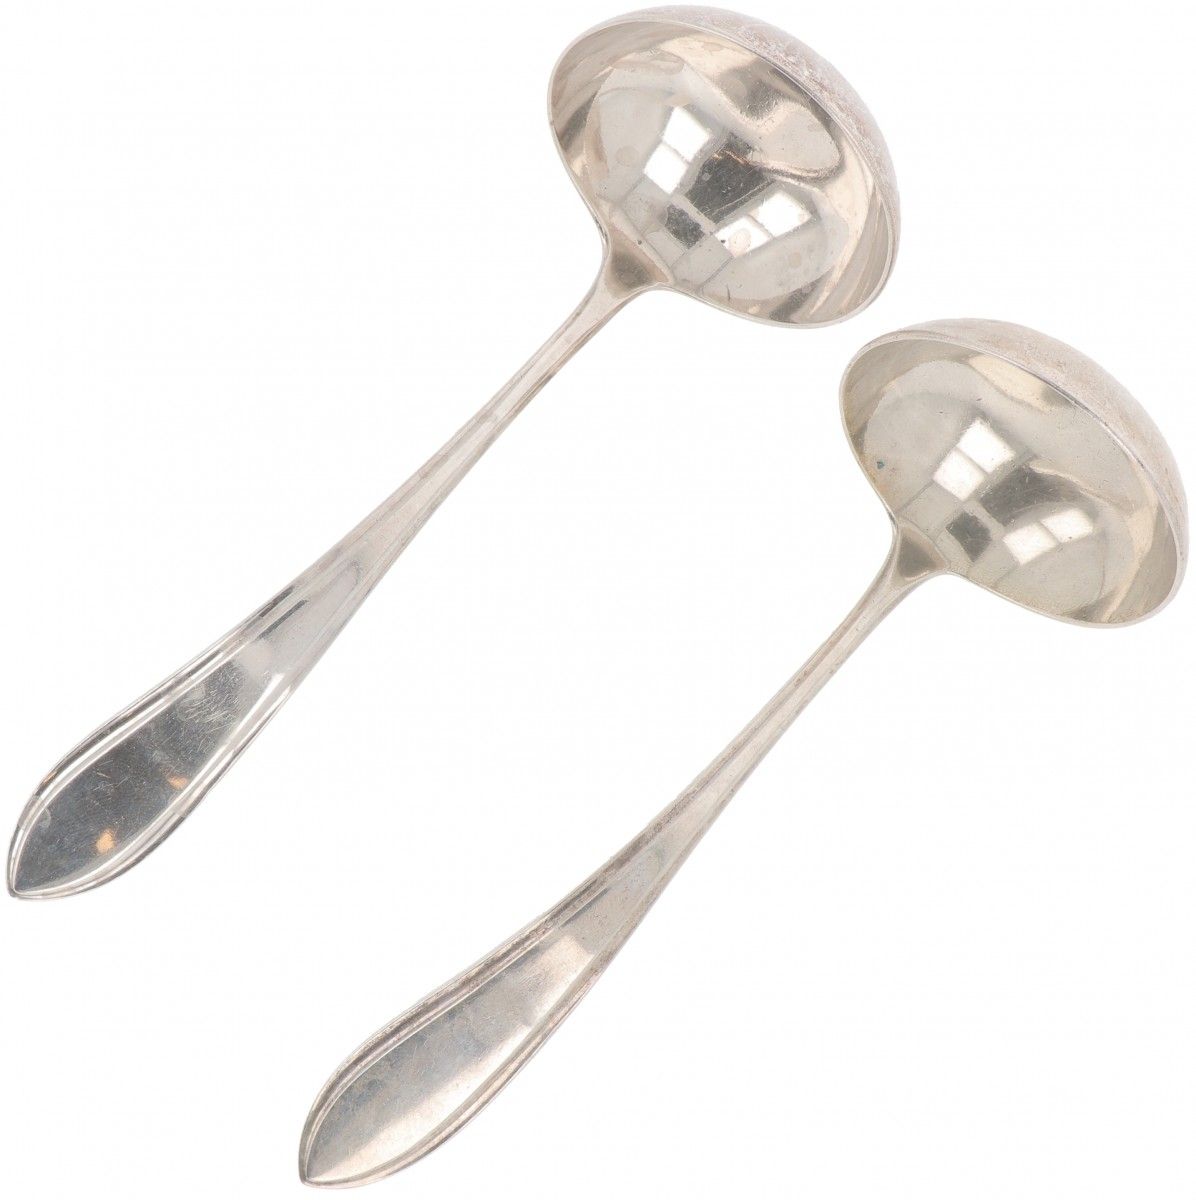 (2) piece set of sauce spoons "Dutch point fillet" silver. "Filetto a punta olan&hellip;